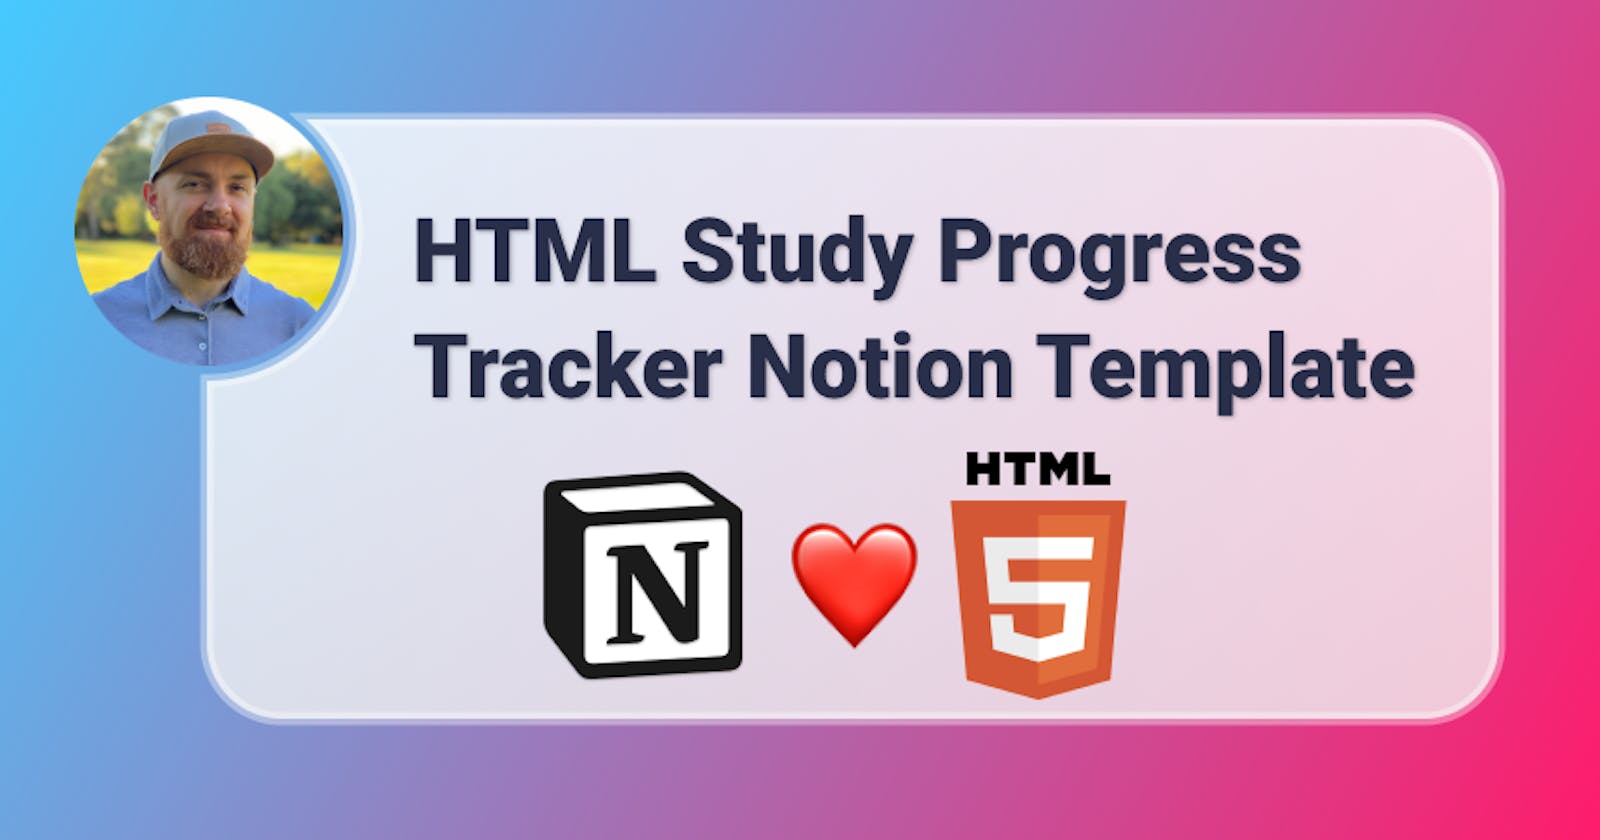 HTML Study Progress Tracker Notion Template